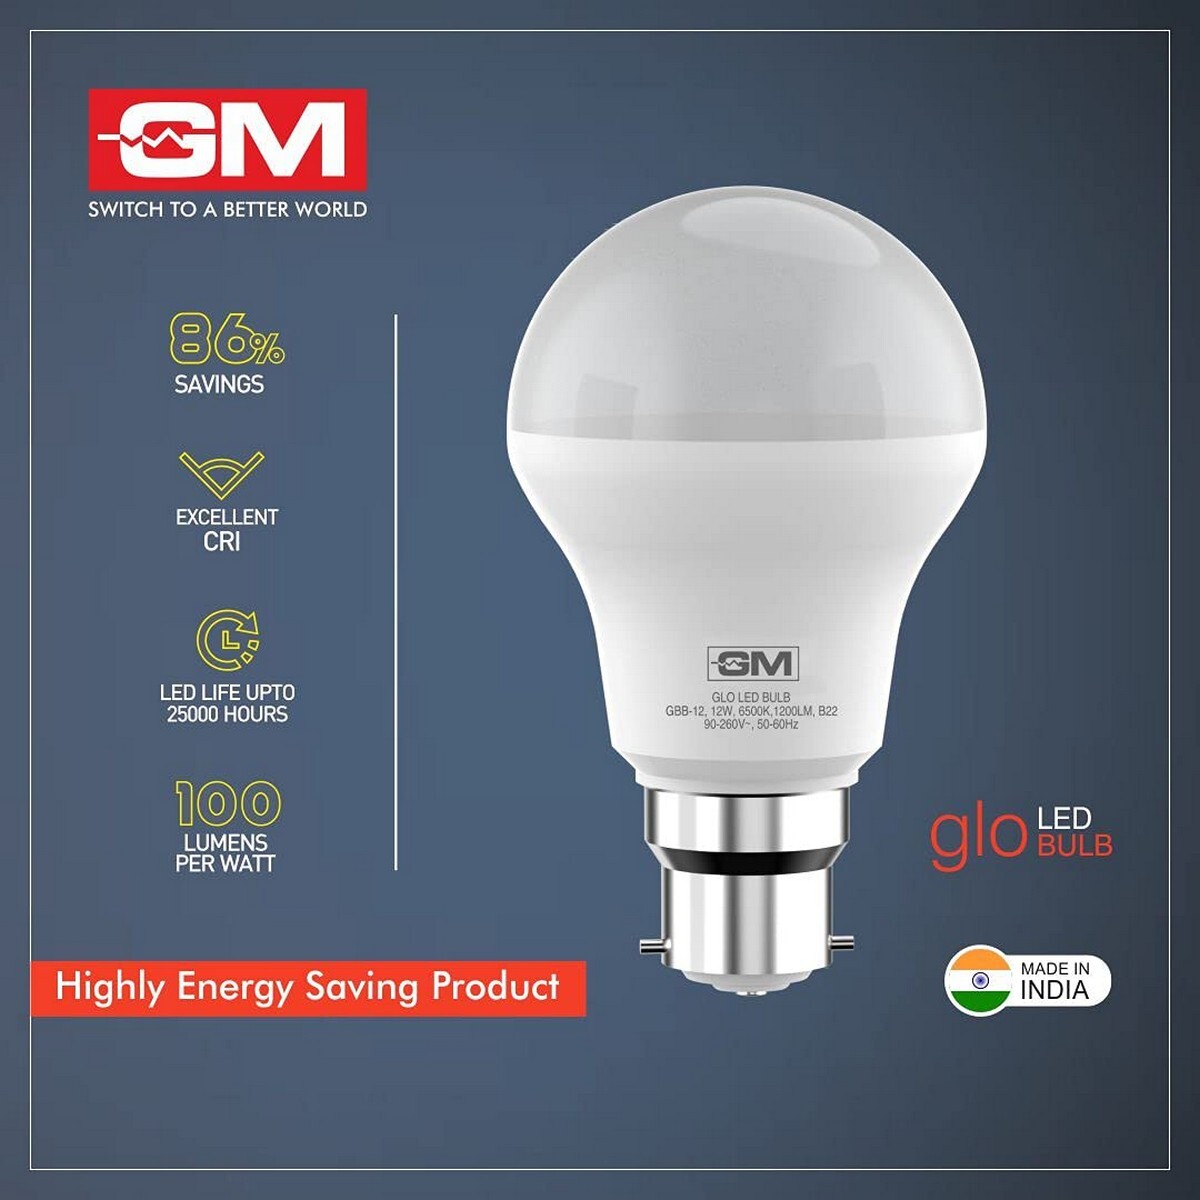 GM Glo 12Watt LED Bulb B22